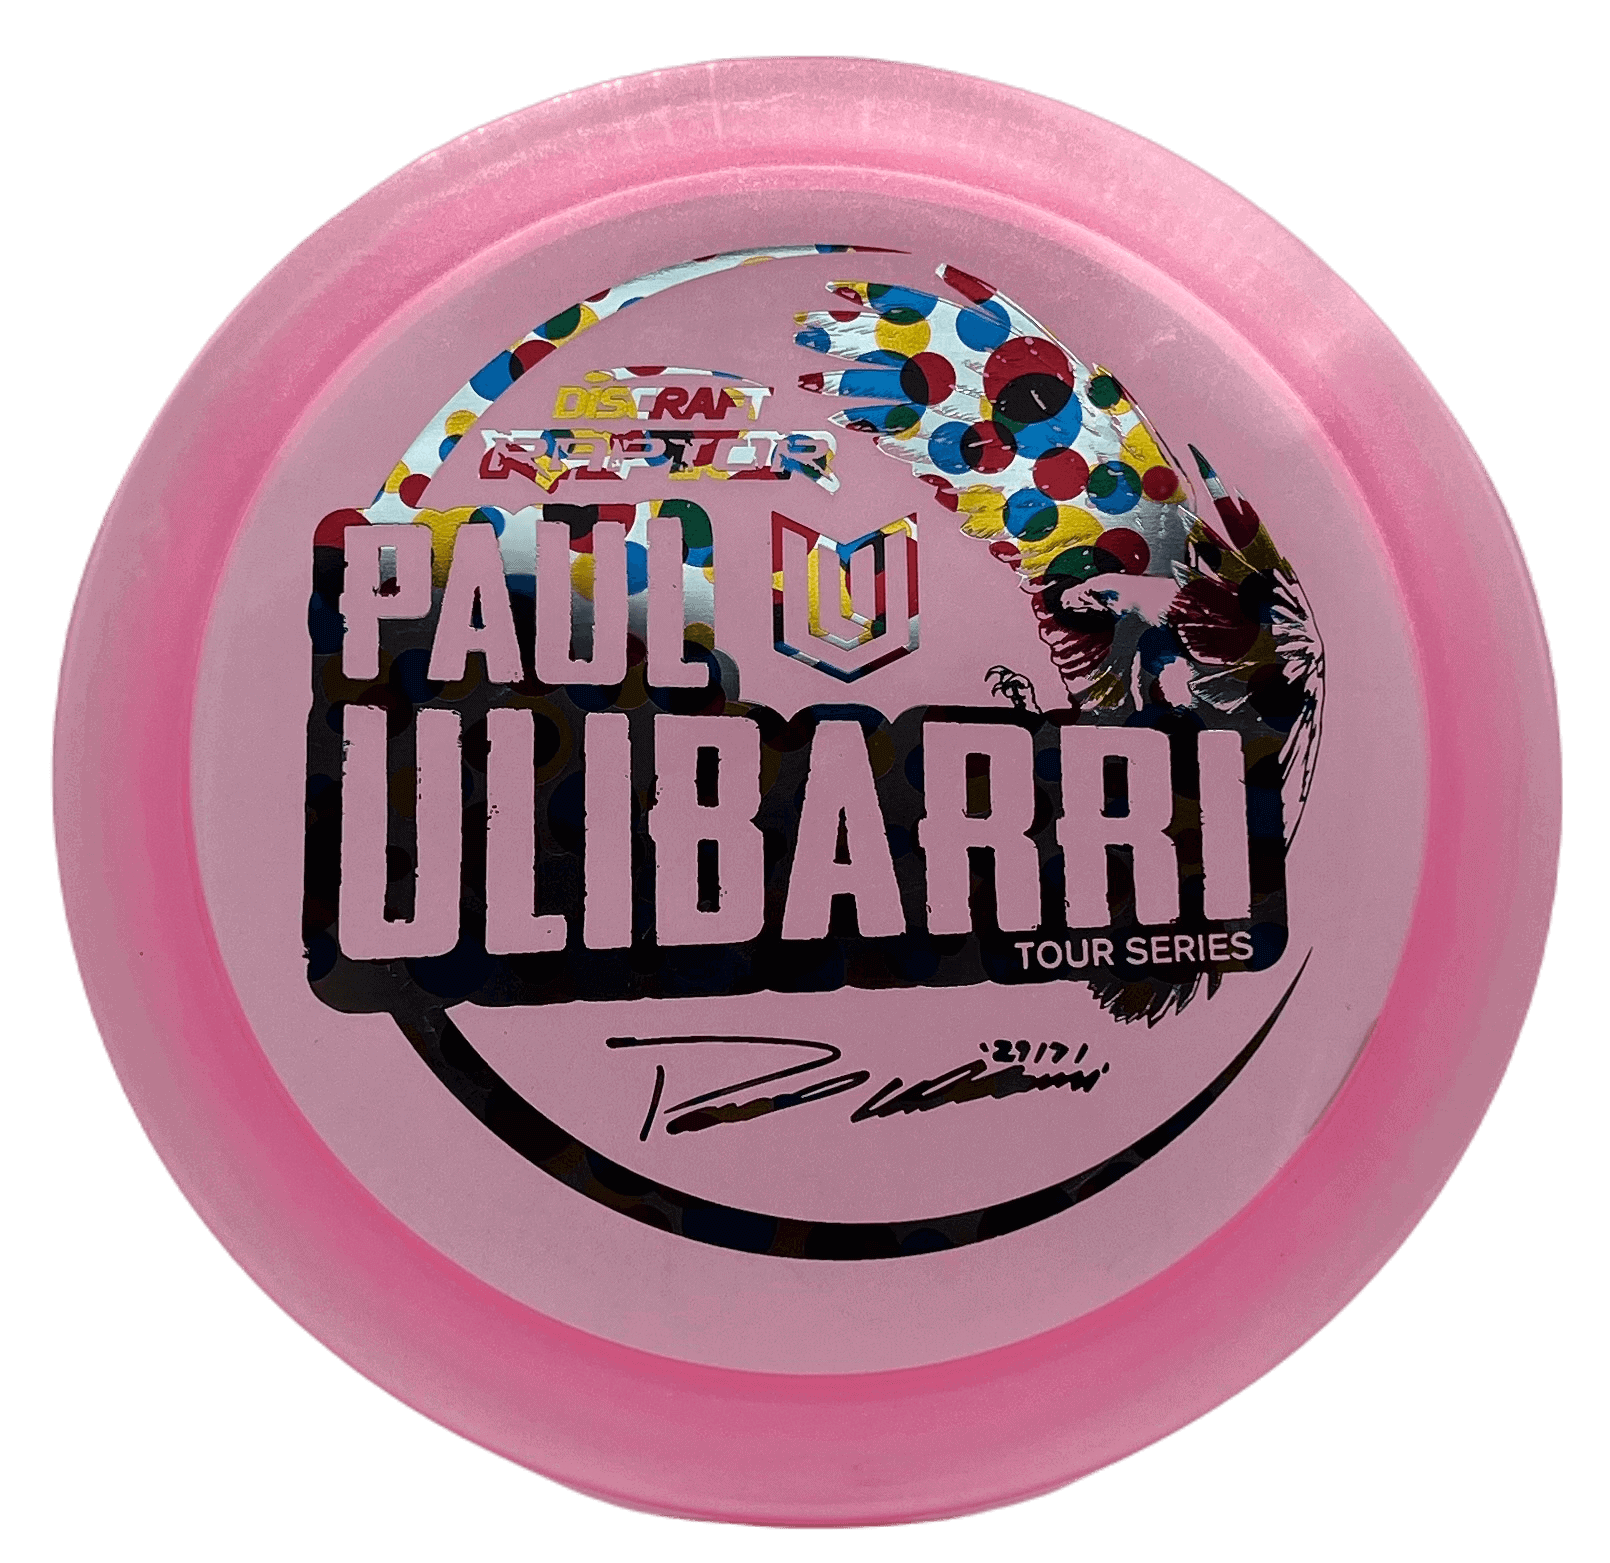 Z Raptor Paul Ulibarri Tour Series